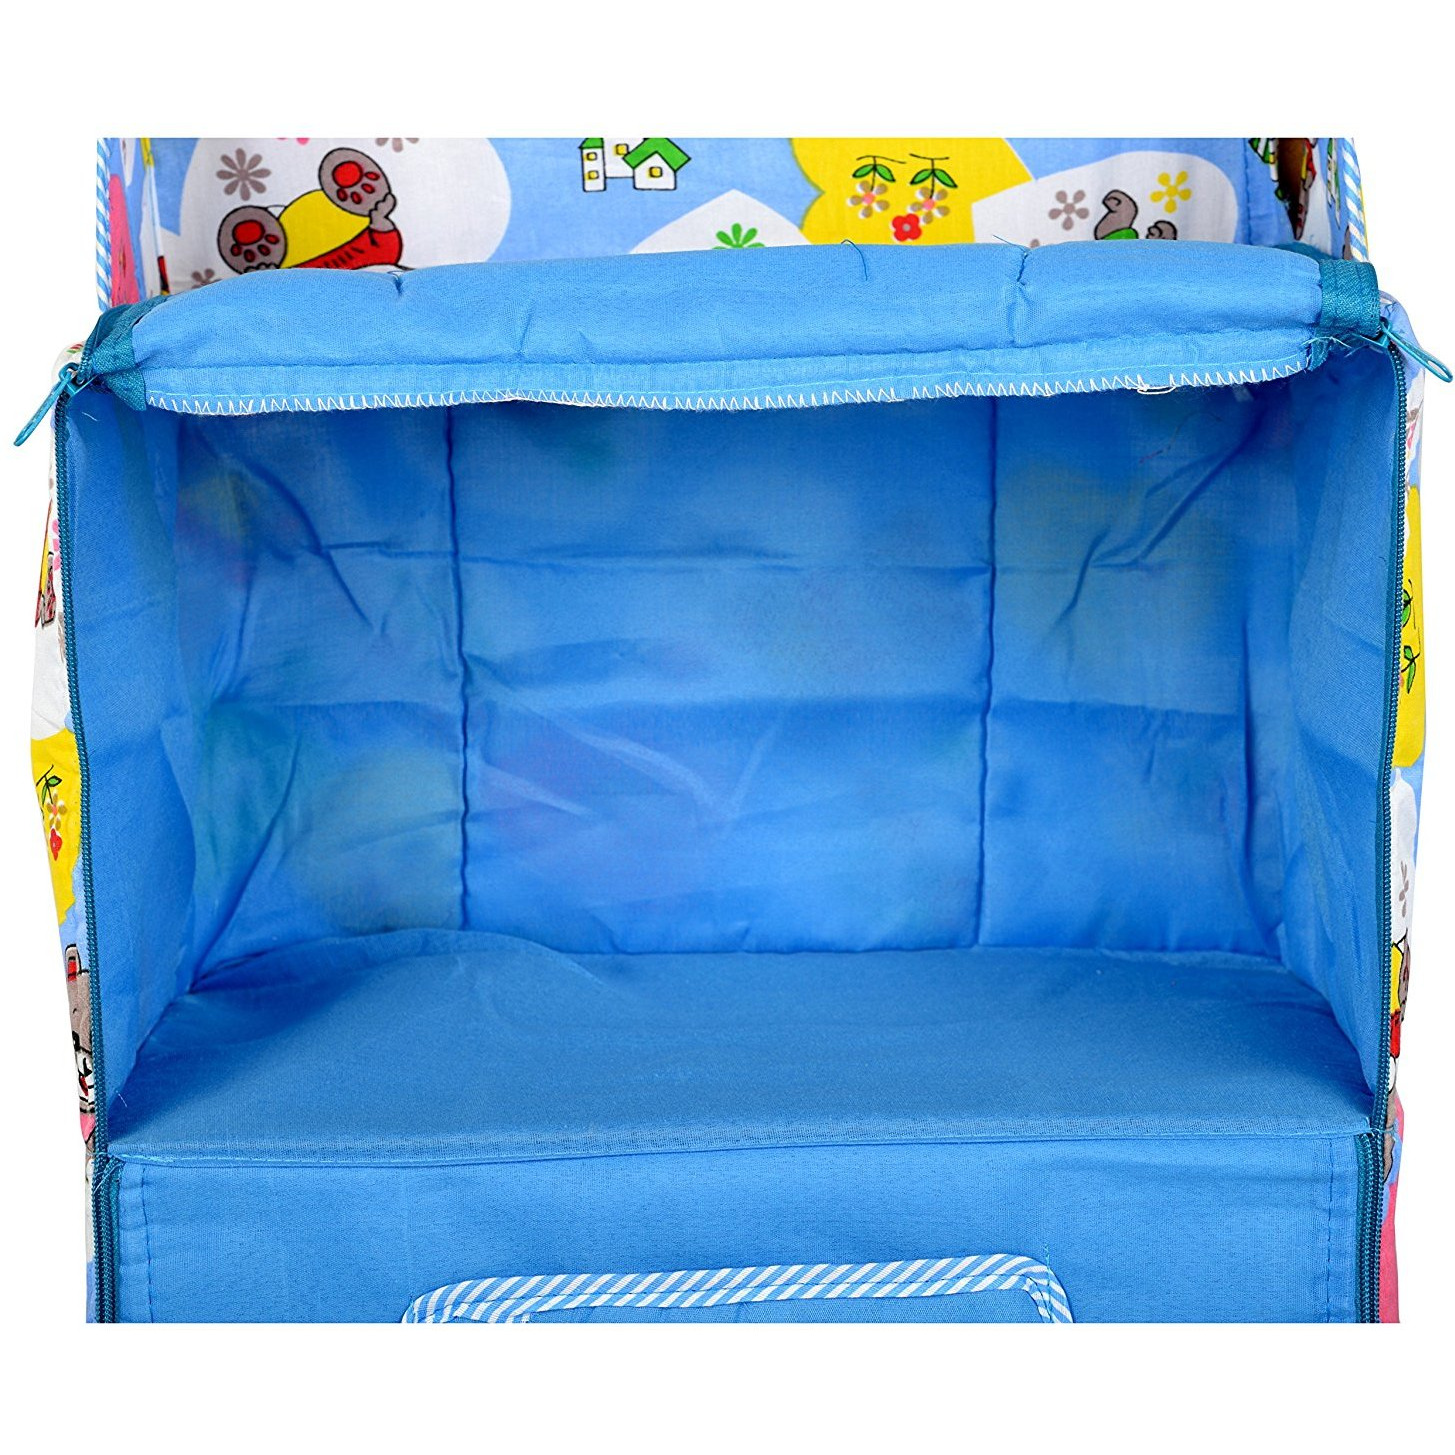 Love Baby Small Teddy Bear Kids Cupboard 3 Step - DKBC17 Blue